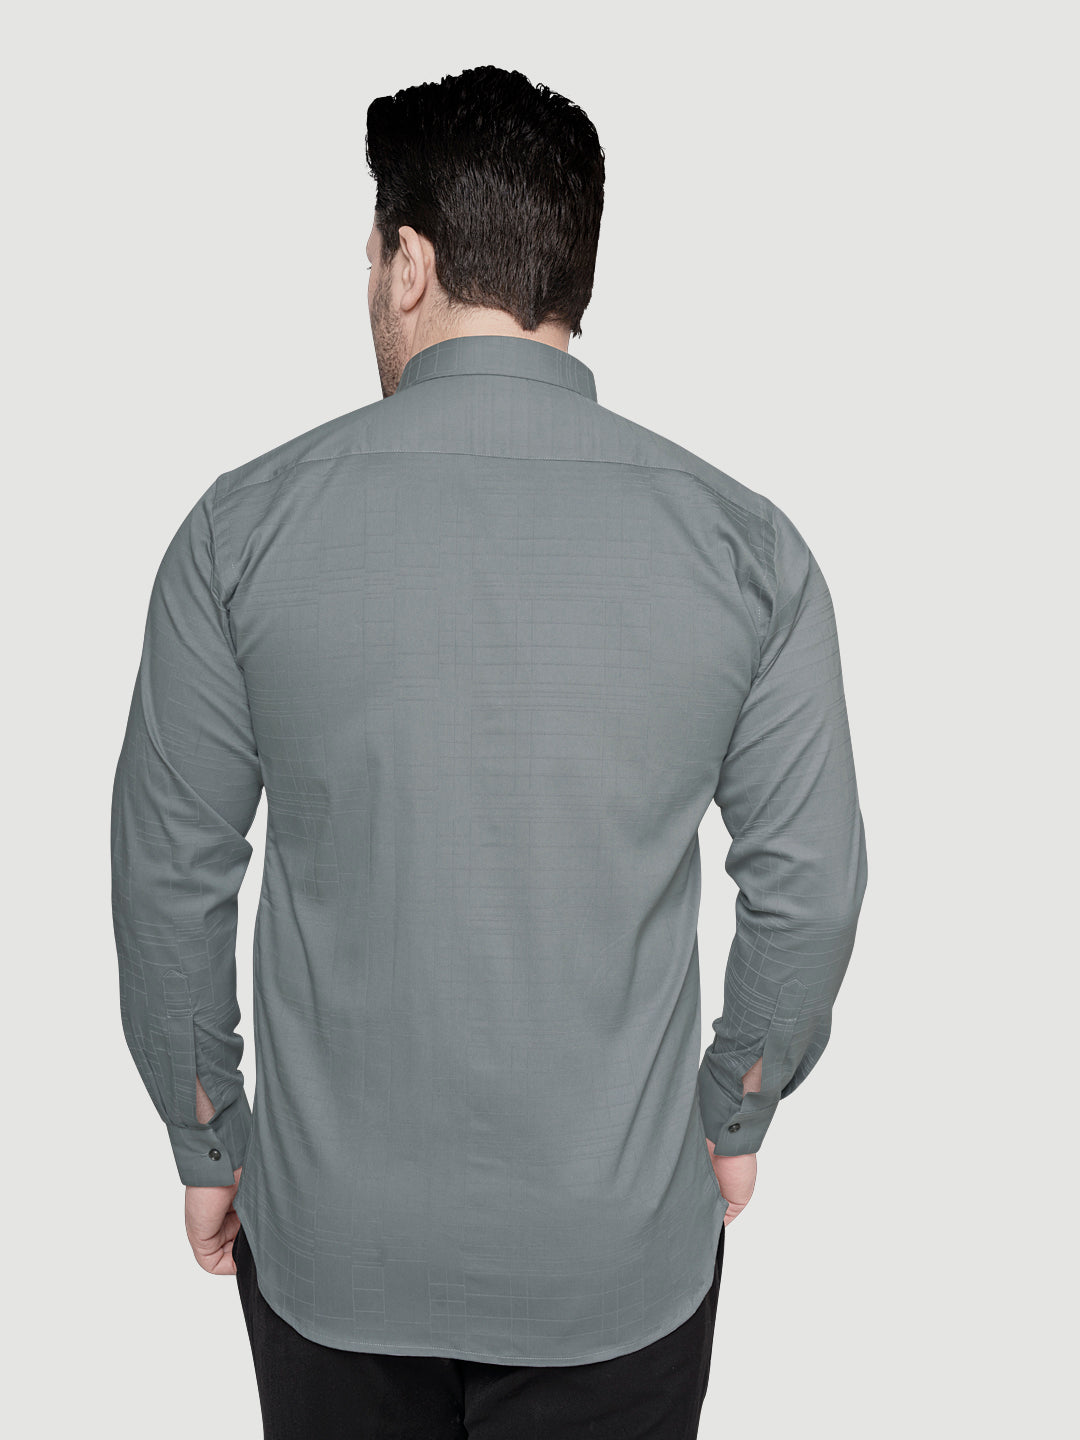 Men's Designer Shirt with Collar Accessory & Broach-6